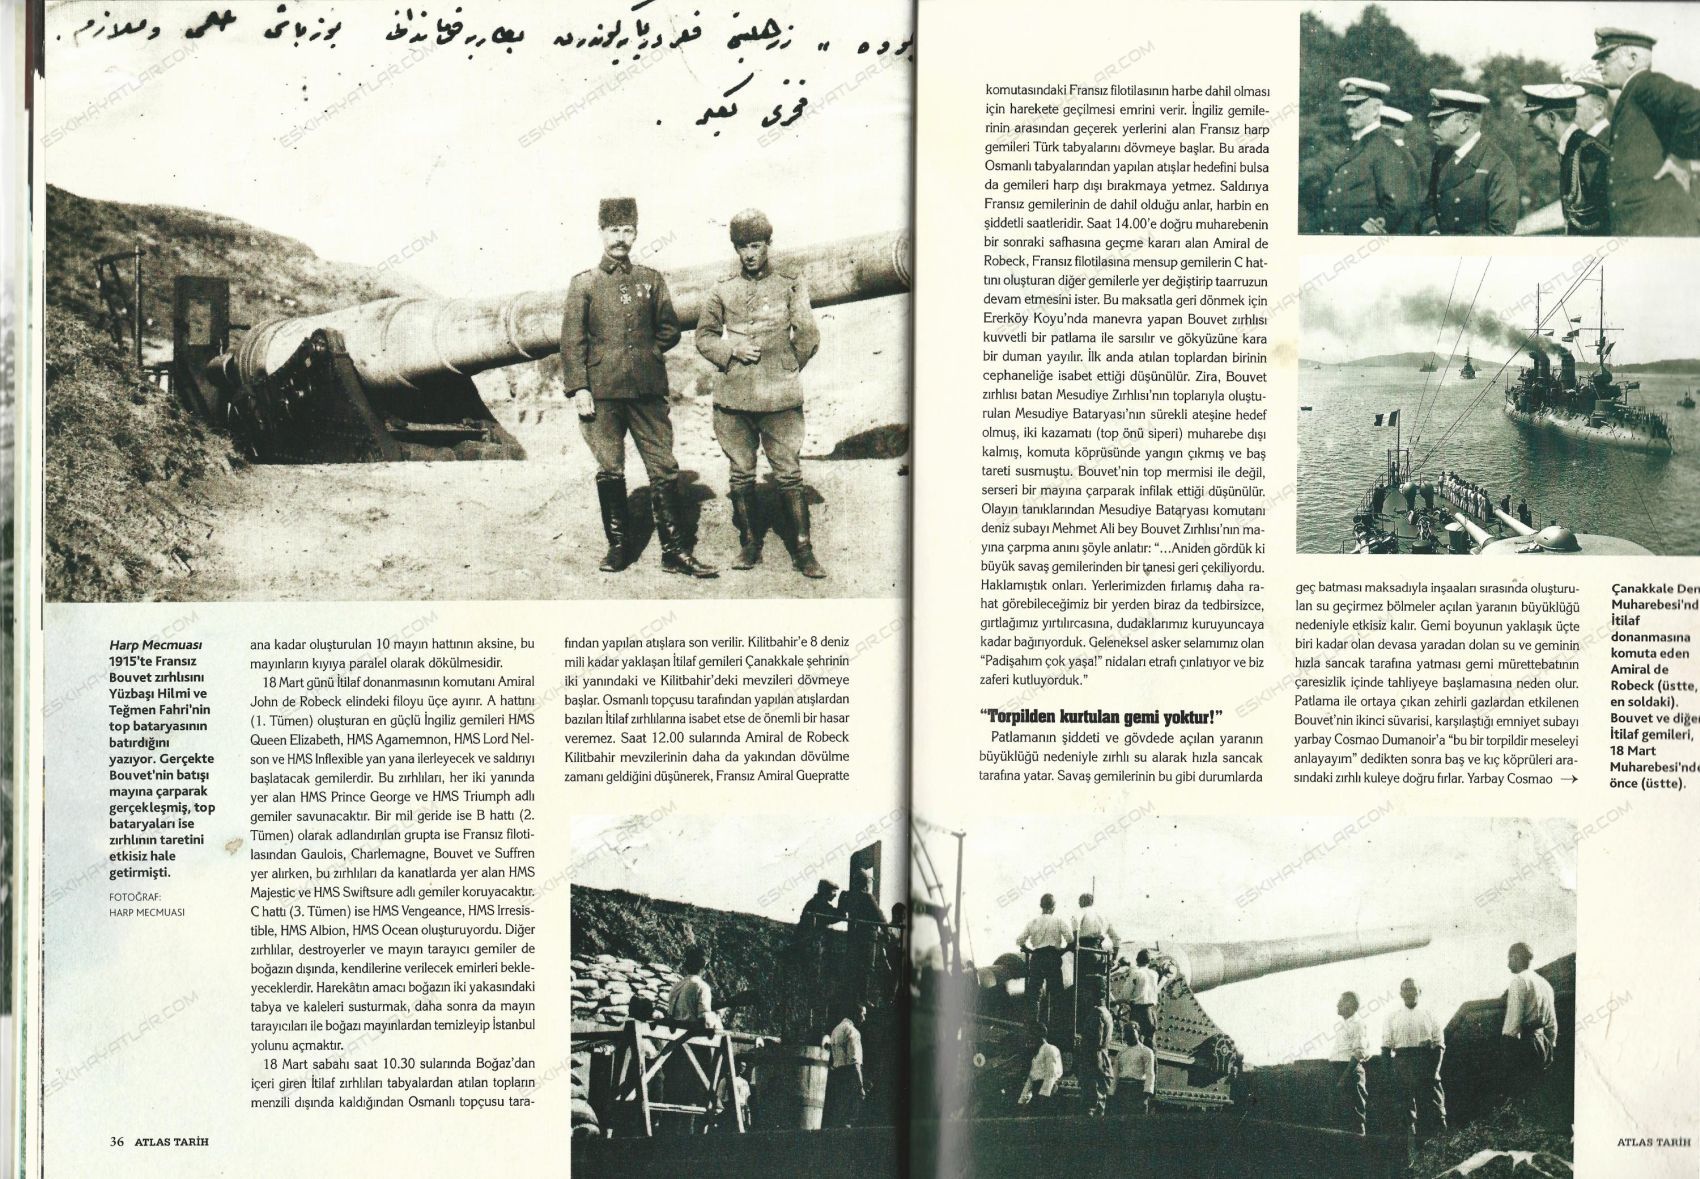 0333-18-mart-1915-deniz-harekati-bouovet-zirhlisi-atlas-tarih-dergisi-oguz-otay-arsivi-harp-mecmuasi (2)